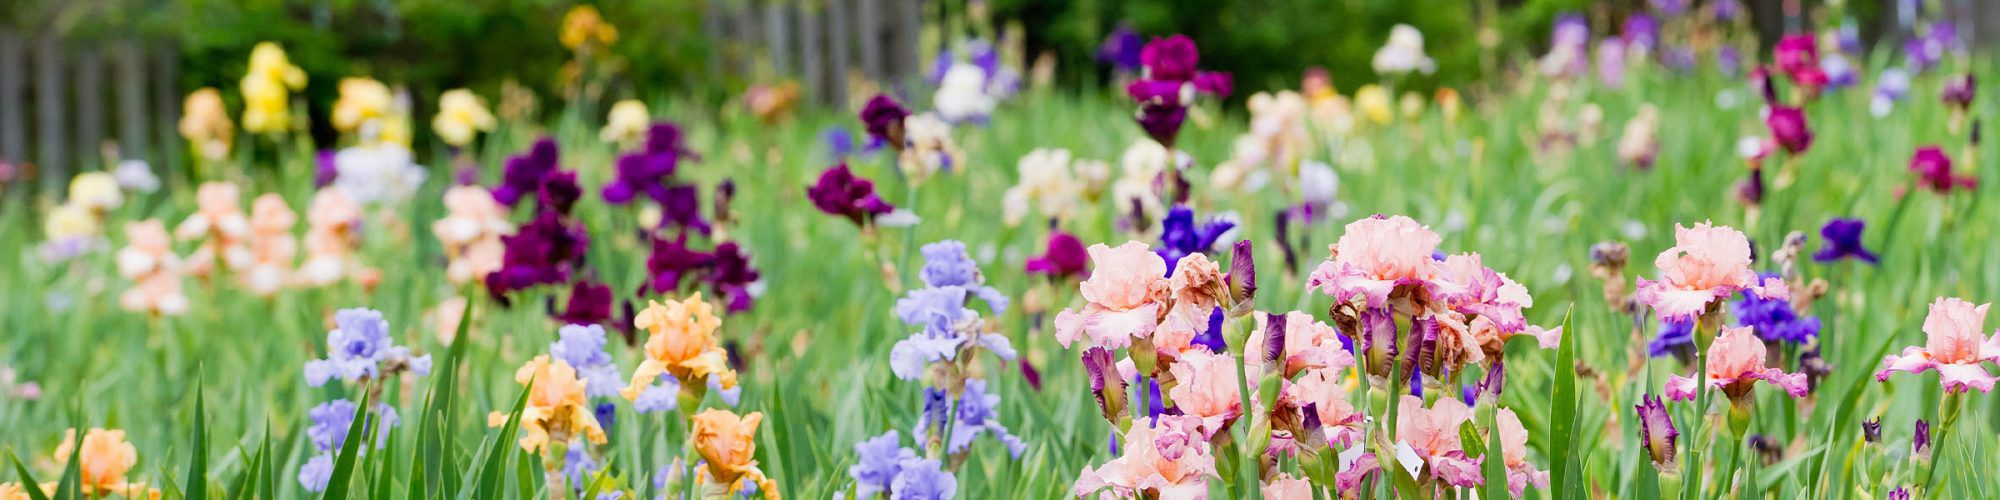 beareded irises growing in garde